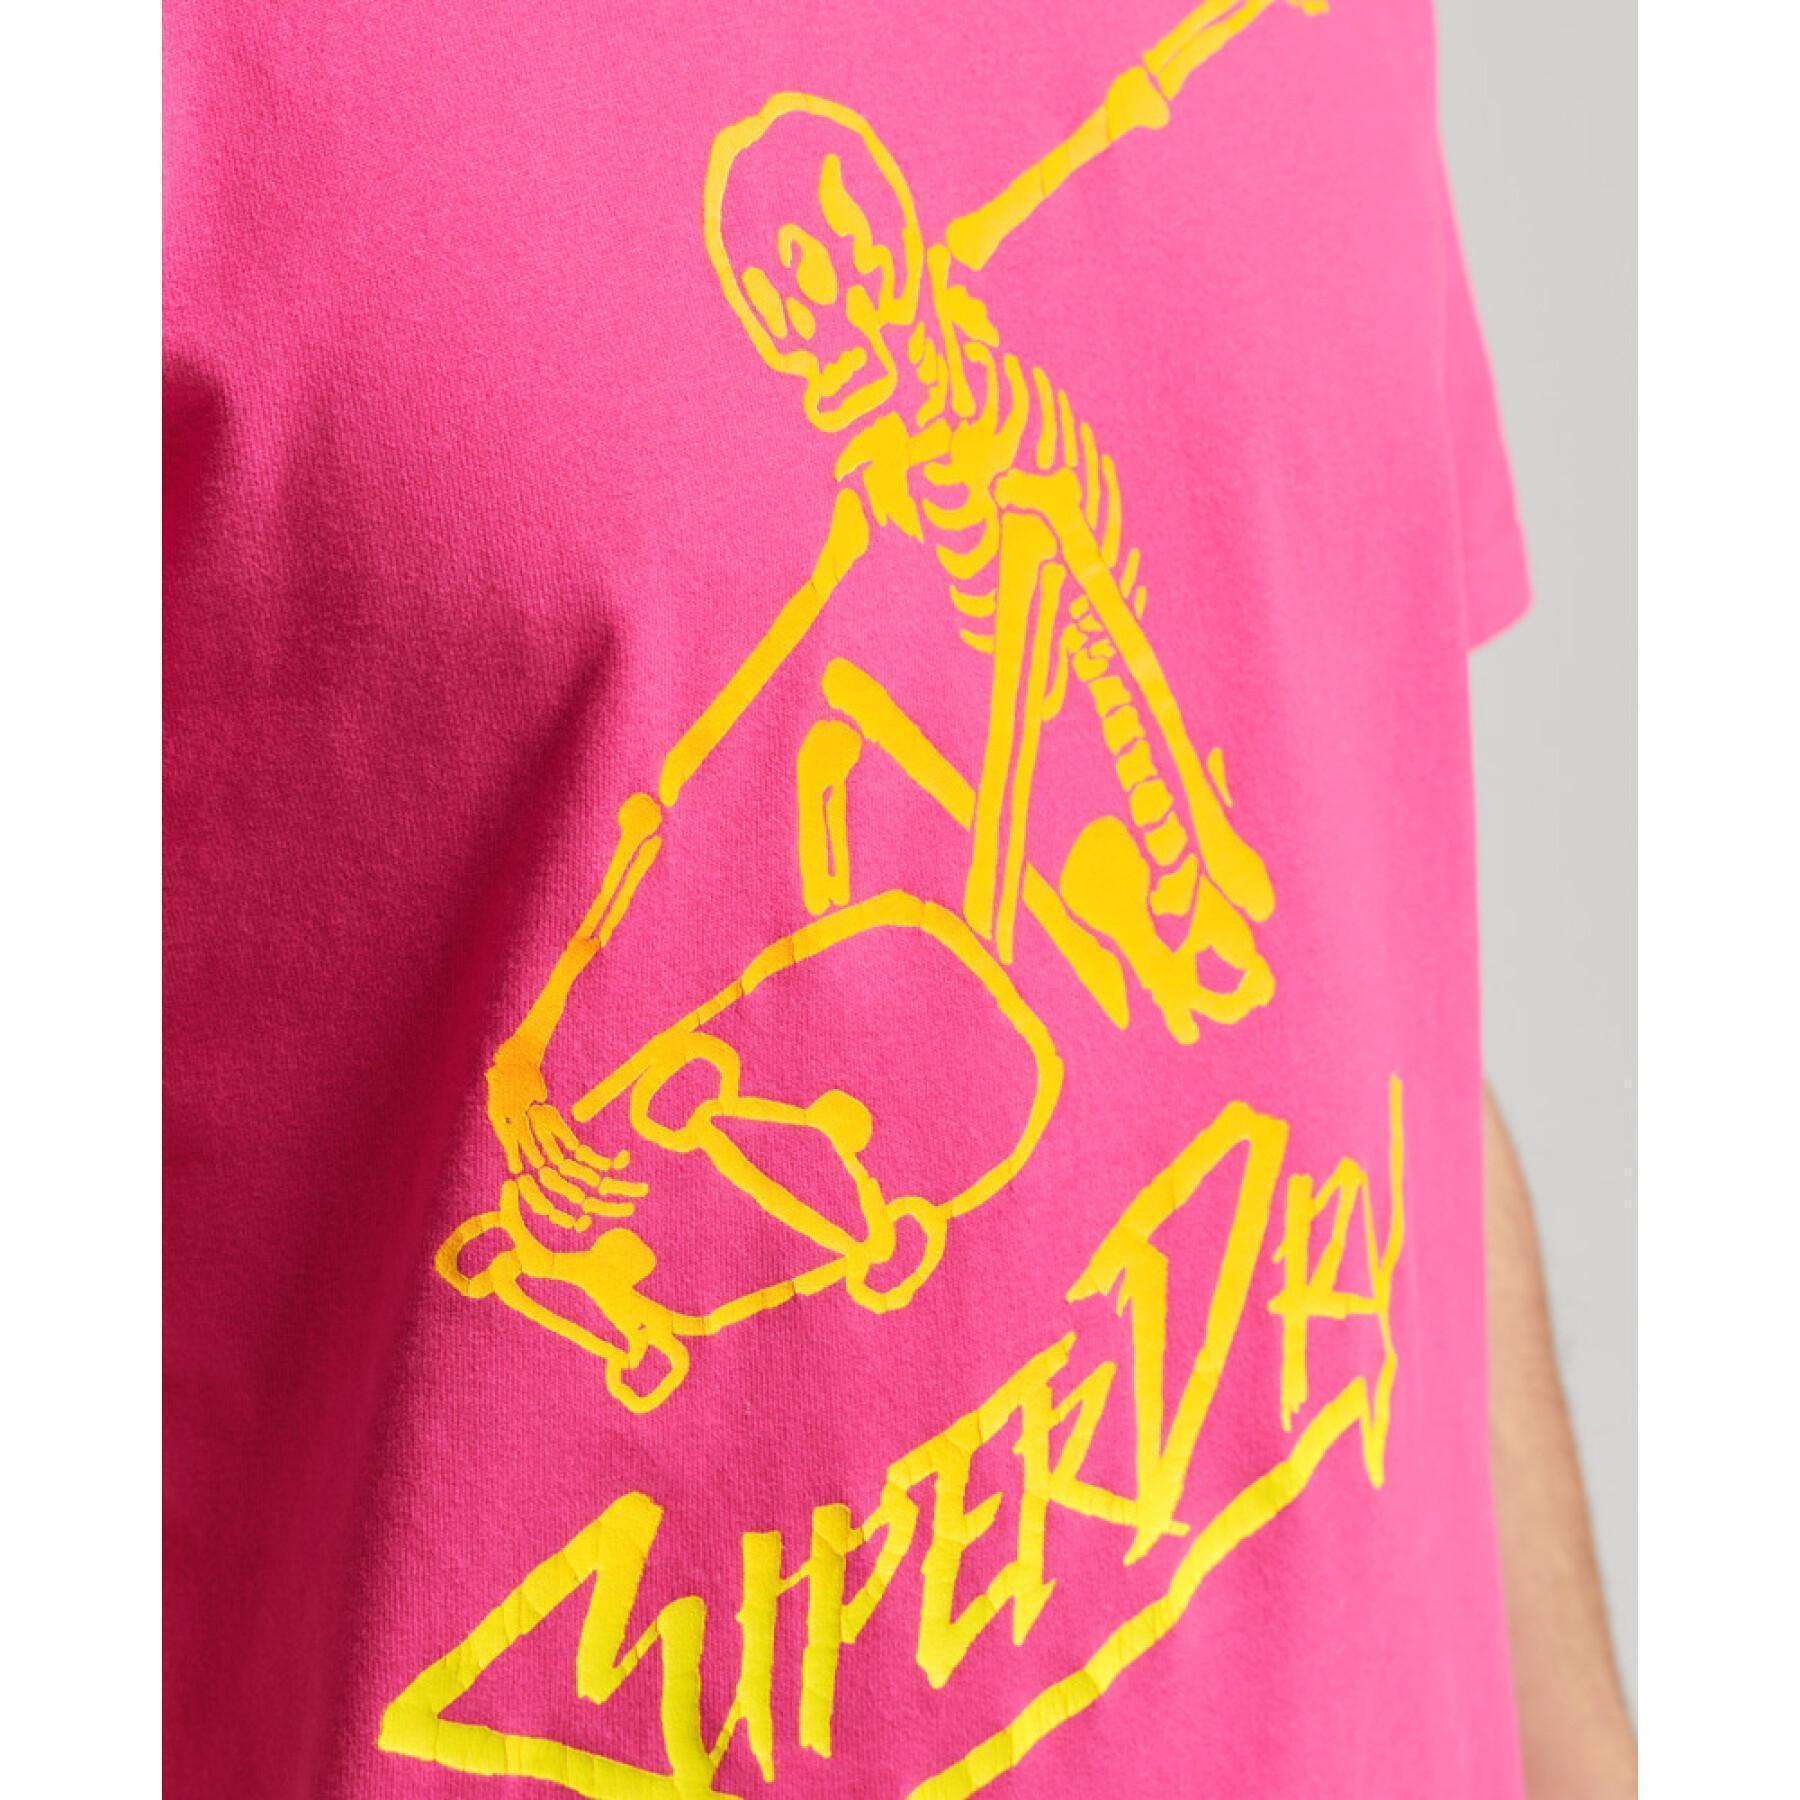 T-shirt Superdry Cali